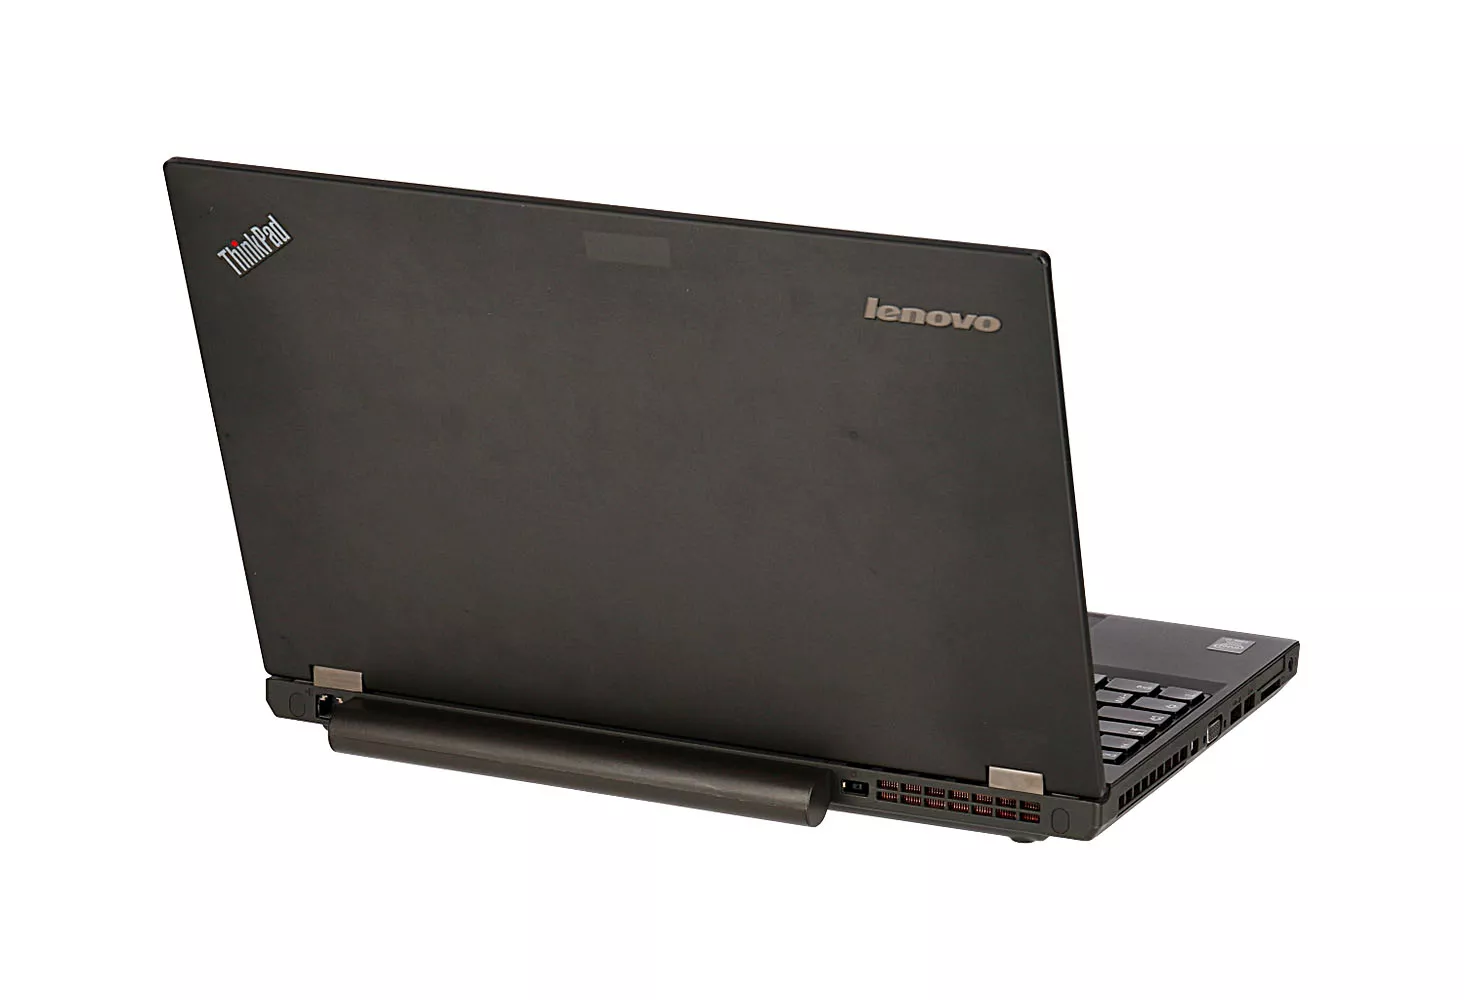 Lenovo ThinkPad W540 Core i7 4600M 2,9 GHz Webcam